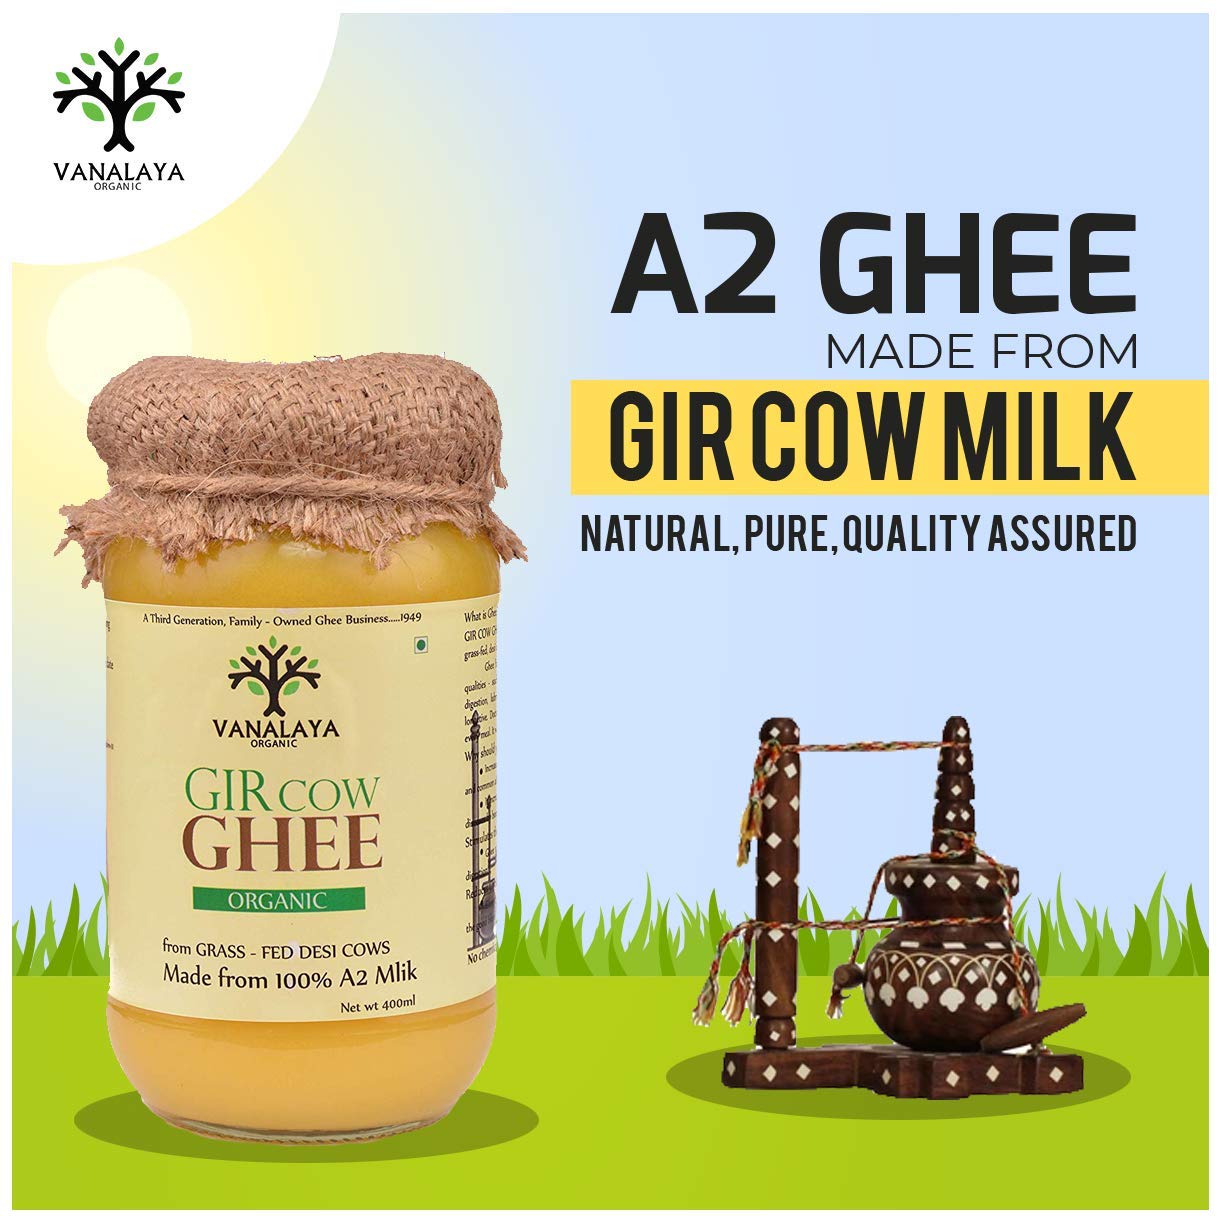 Picture of Vanalaya Organic A2 Desi Gir Cow ghee from A2 Milk Prepared by Traditional Bilona Method -1000ml